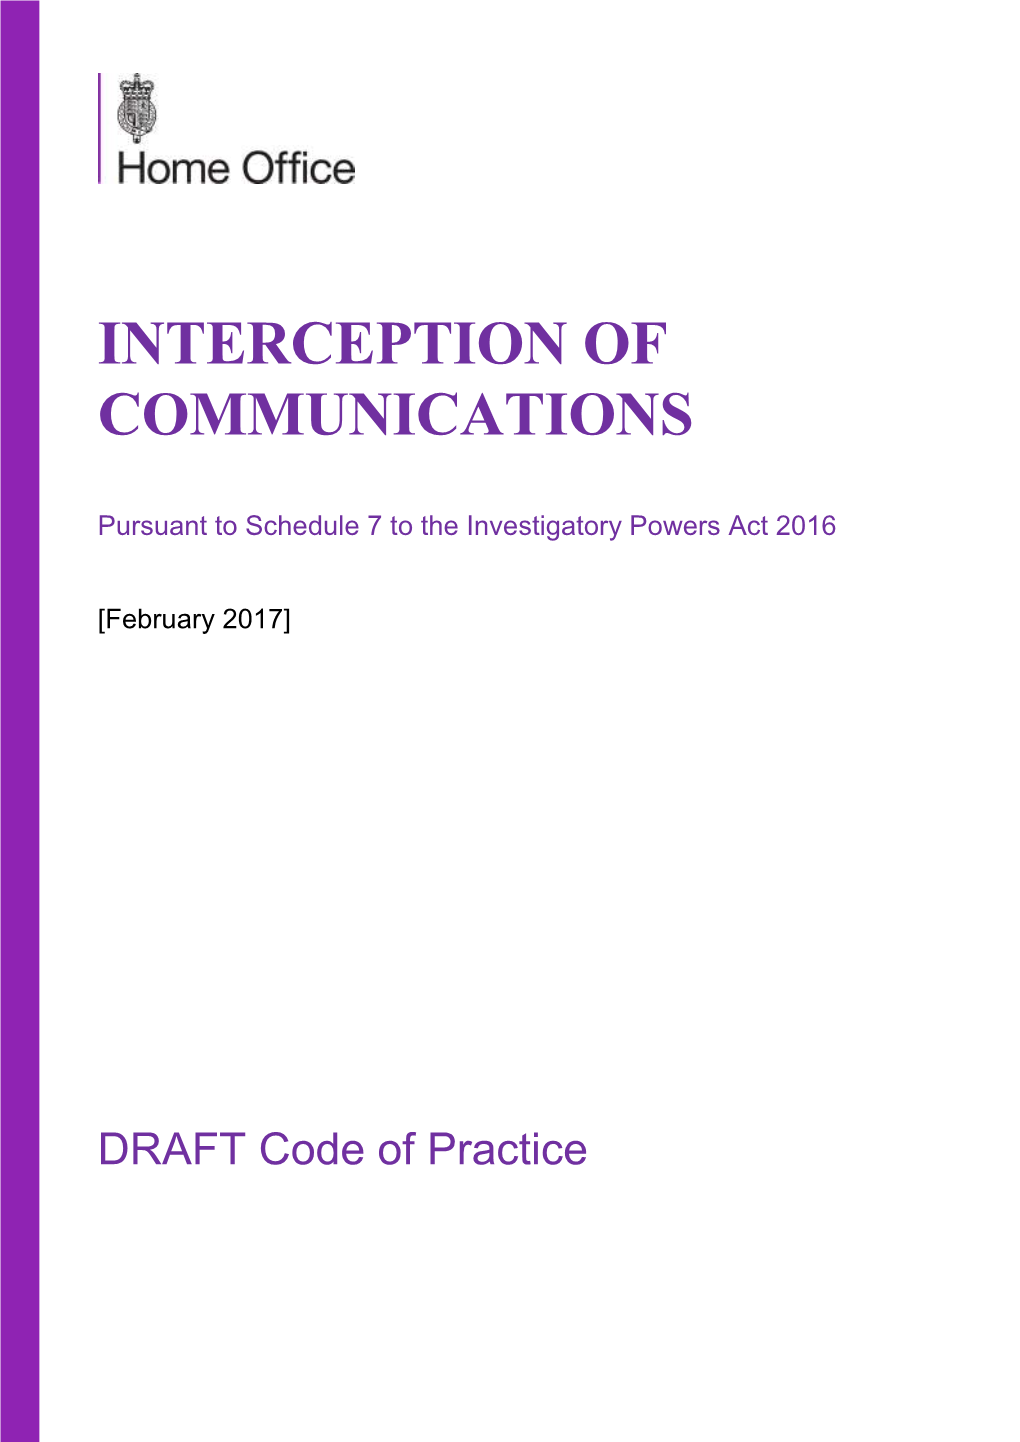 Interception of Communications